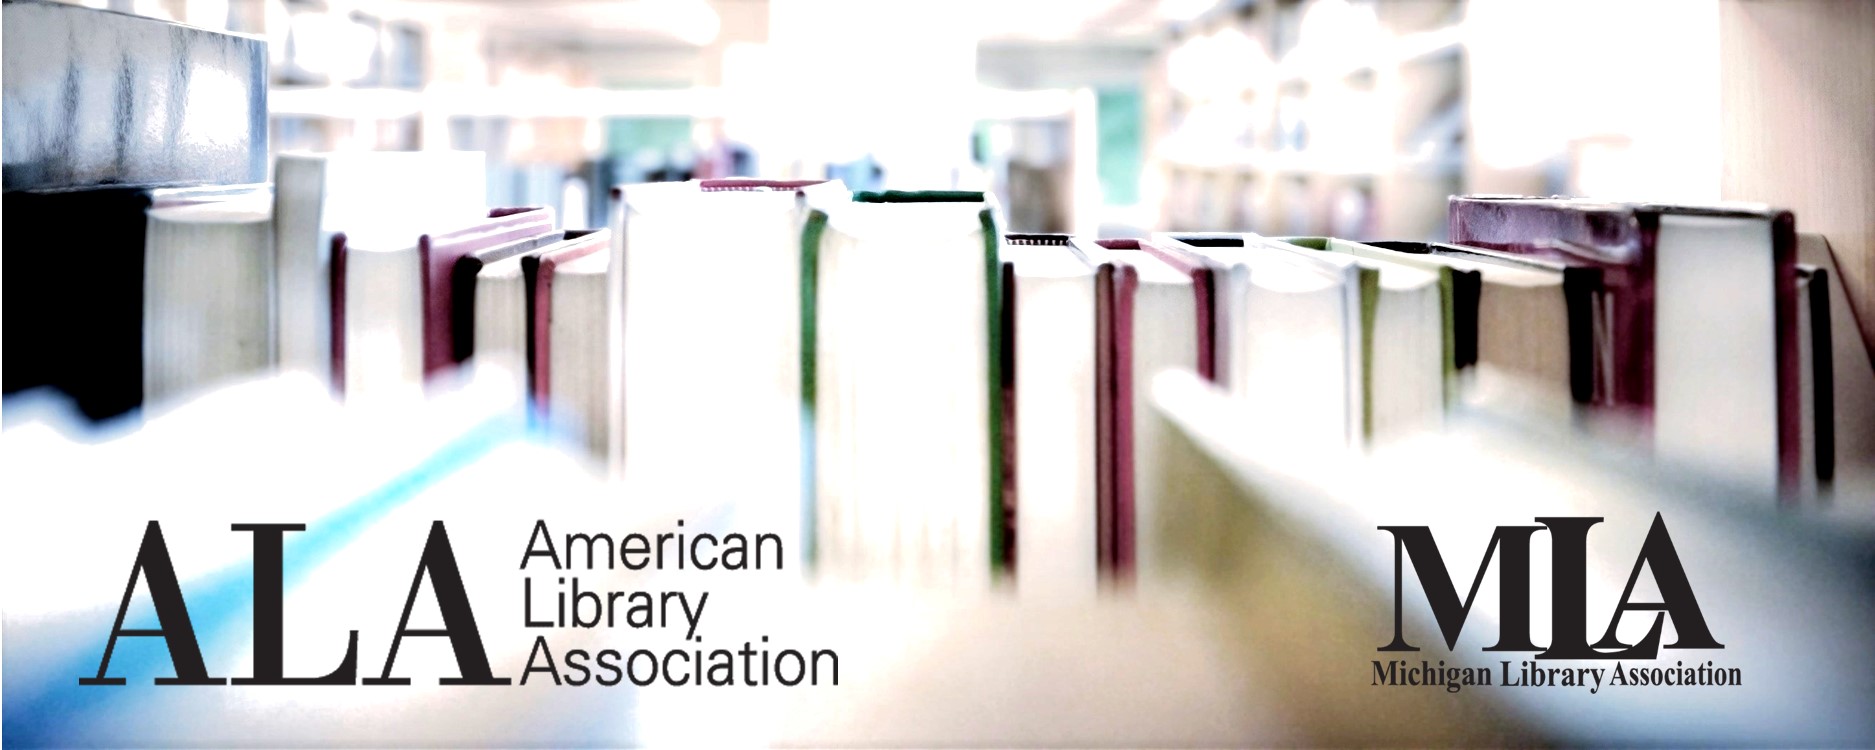 Image peering through a bookshelf with ALA logo and MLA logo